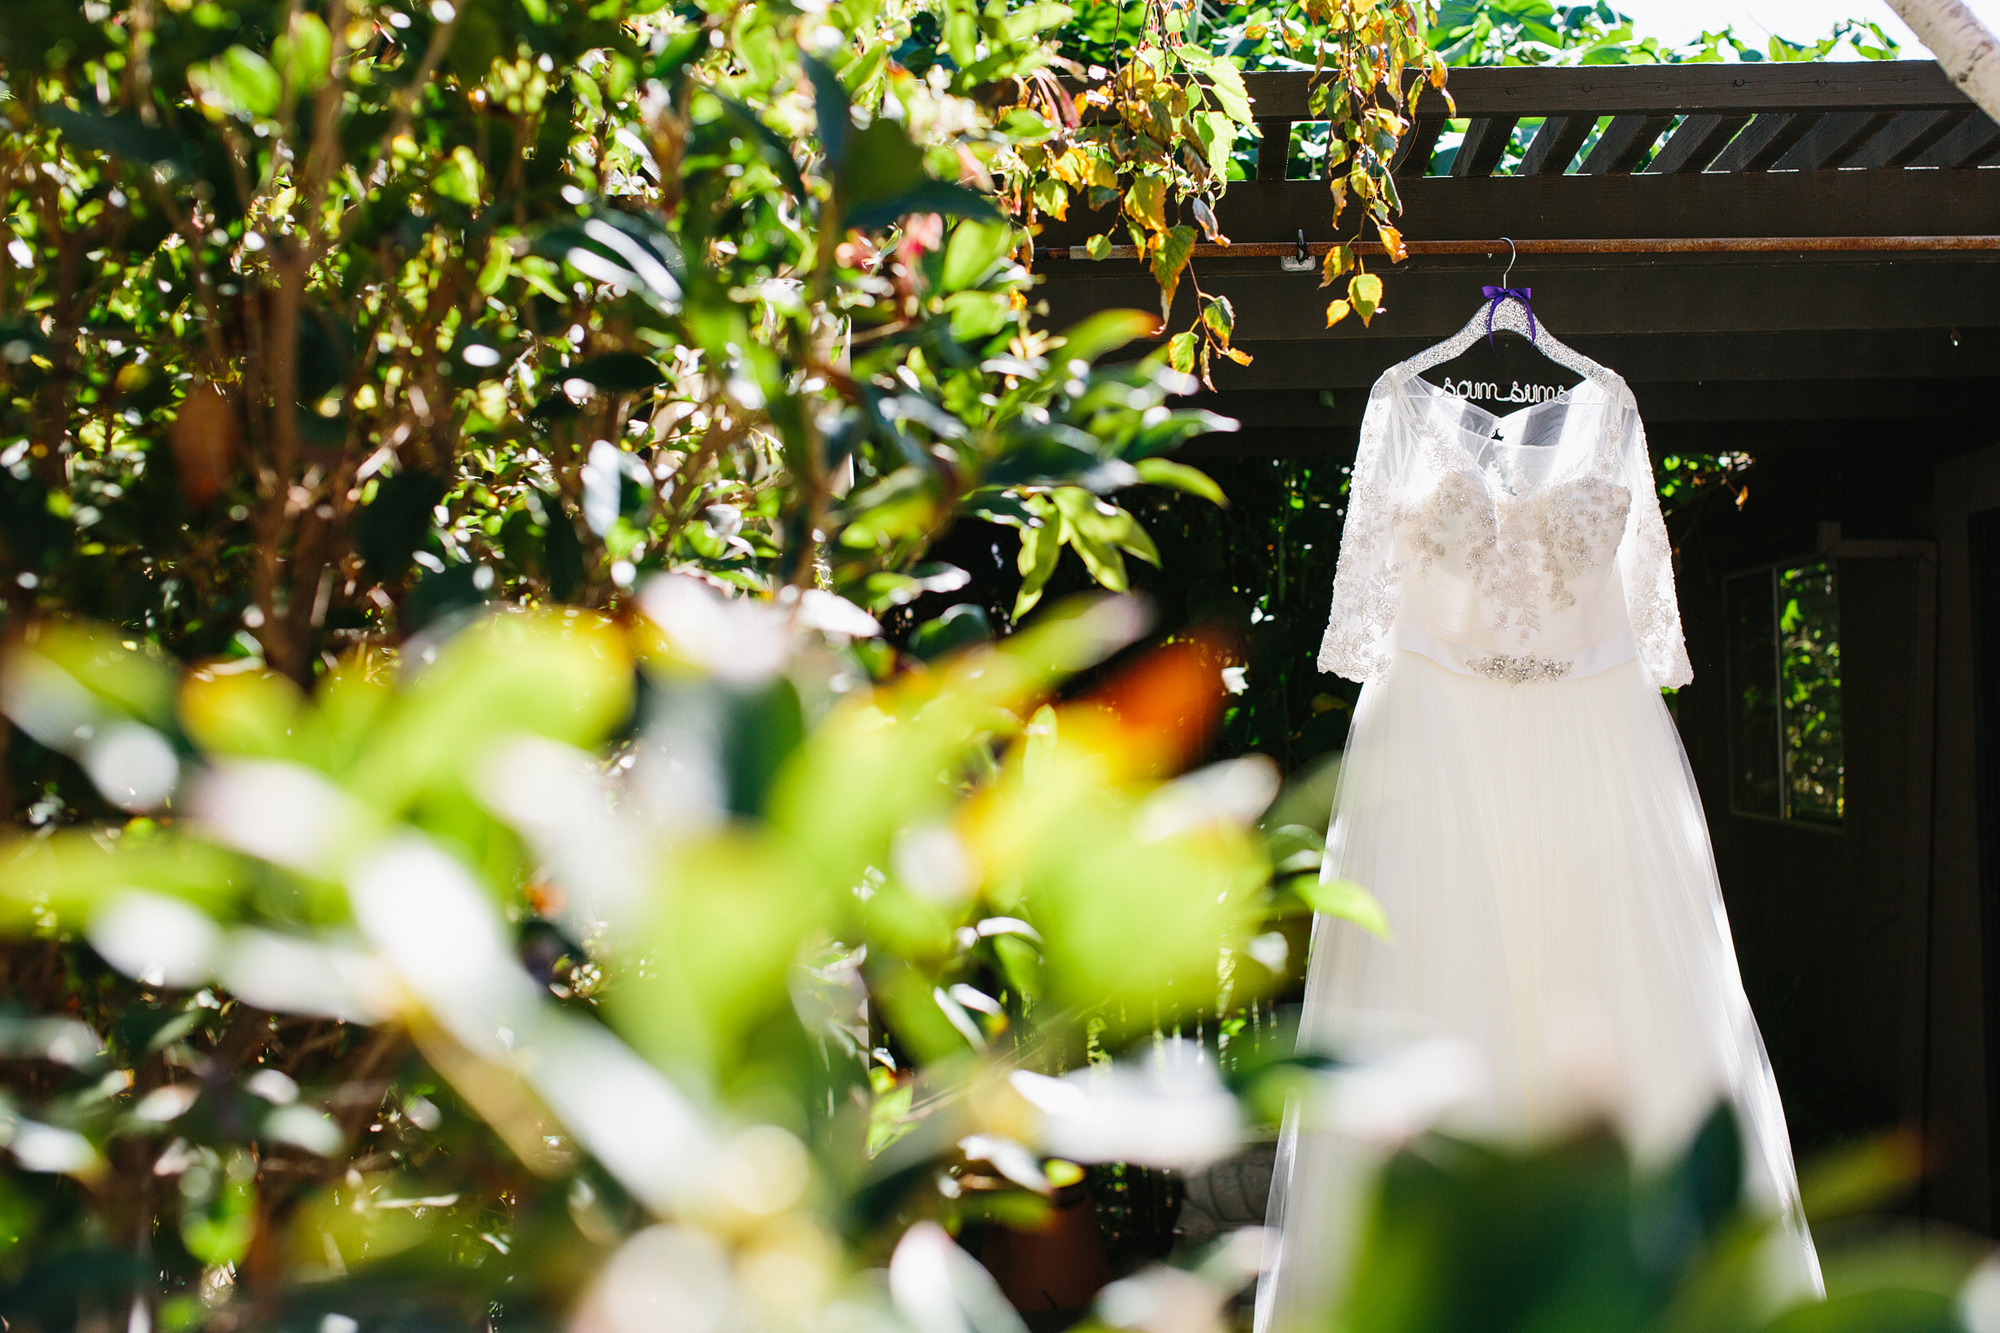 Samara's wedding dress at Maravilla Gardens. 